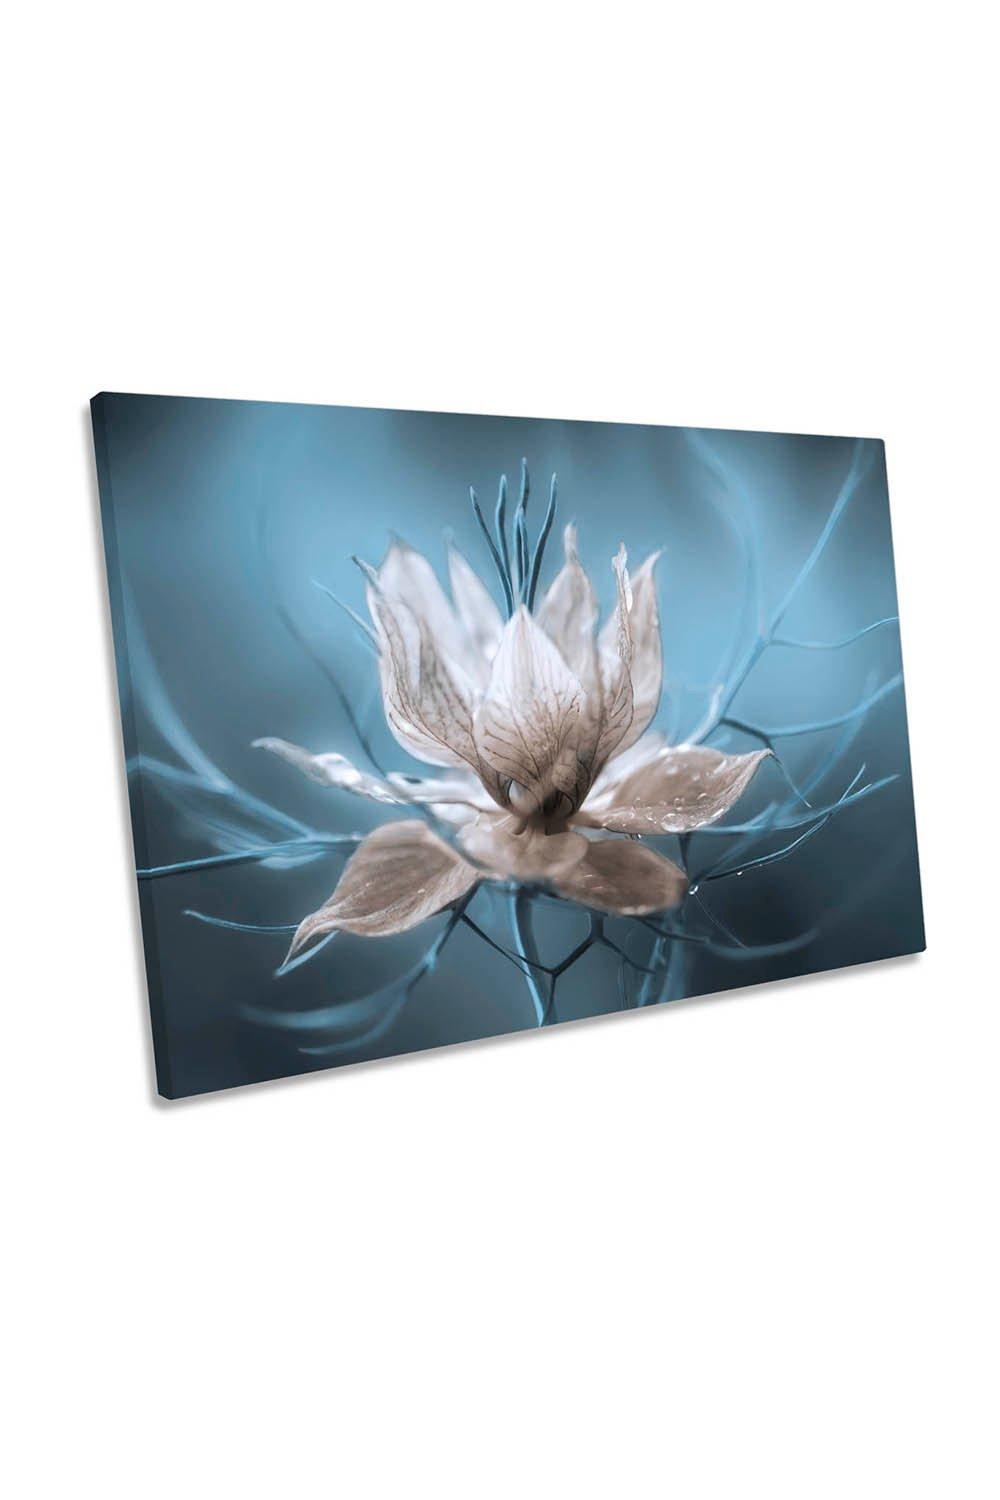 Floral Blue Flowers White Petals Canvas Wall Art Picture Print